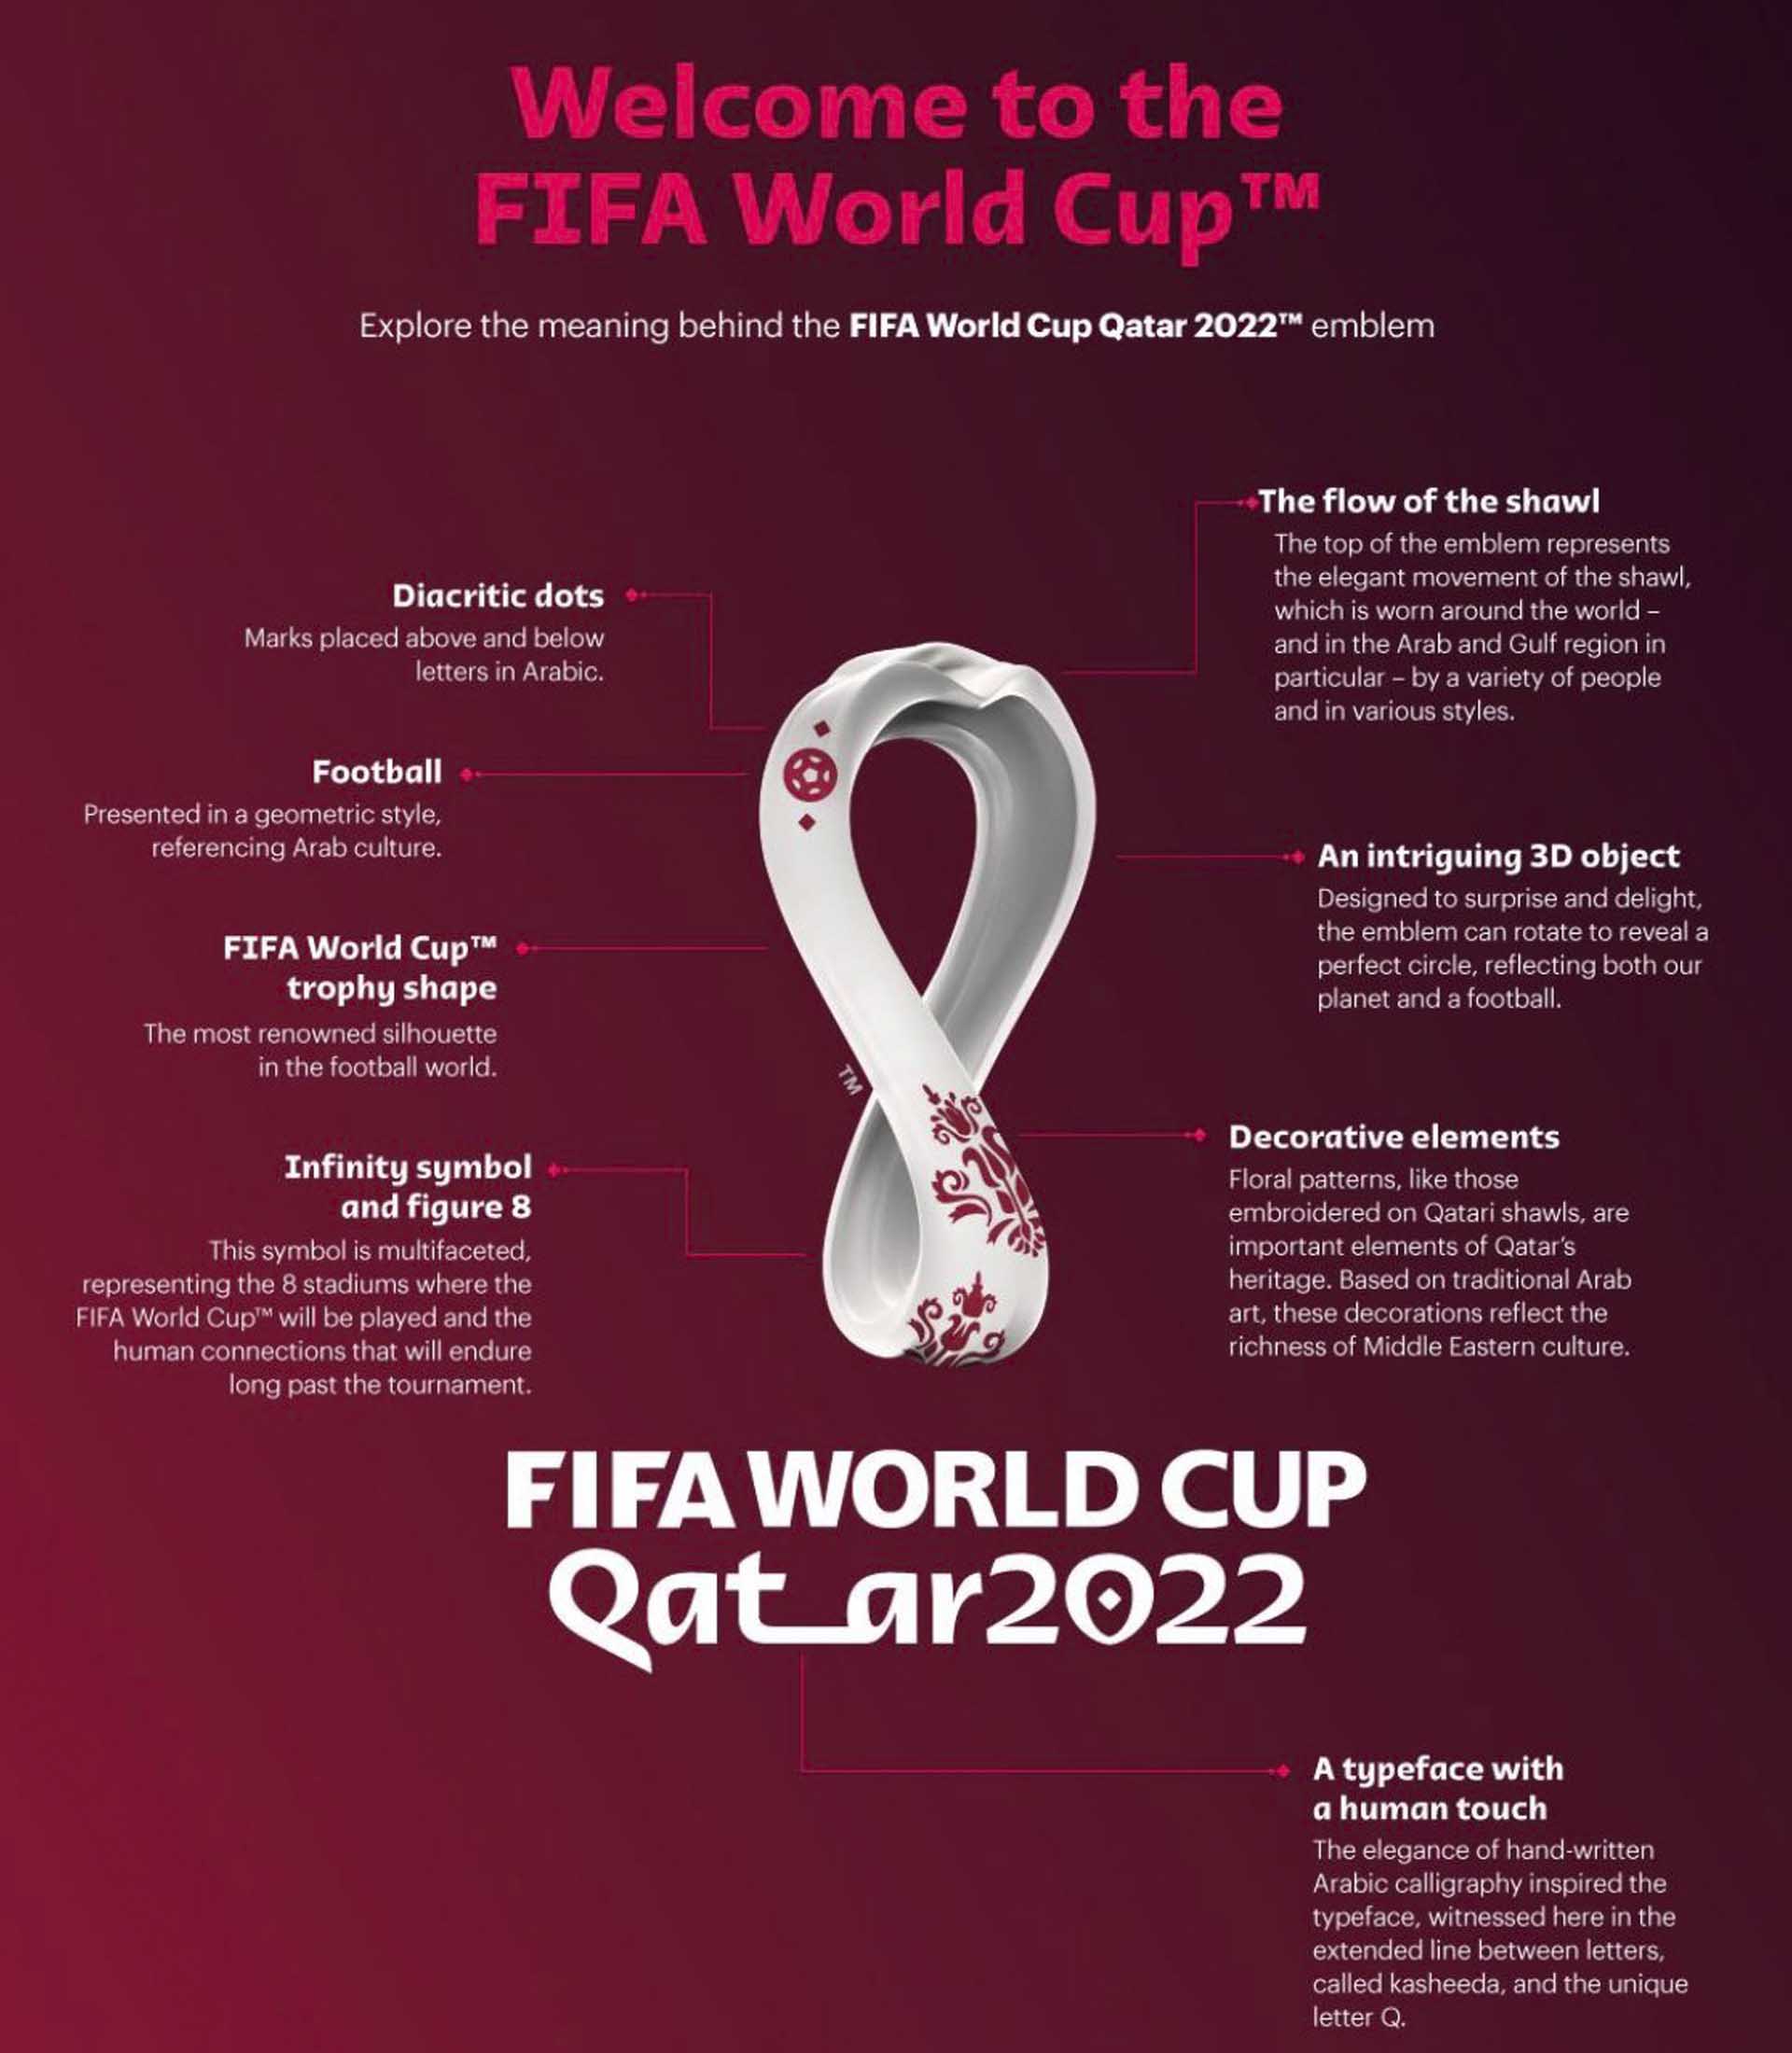 Image of World Cup Qatar 2022 emblem